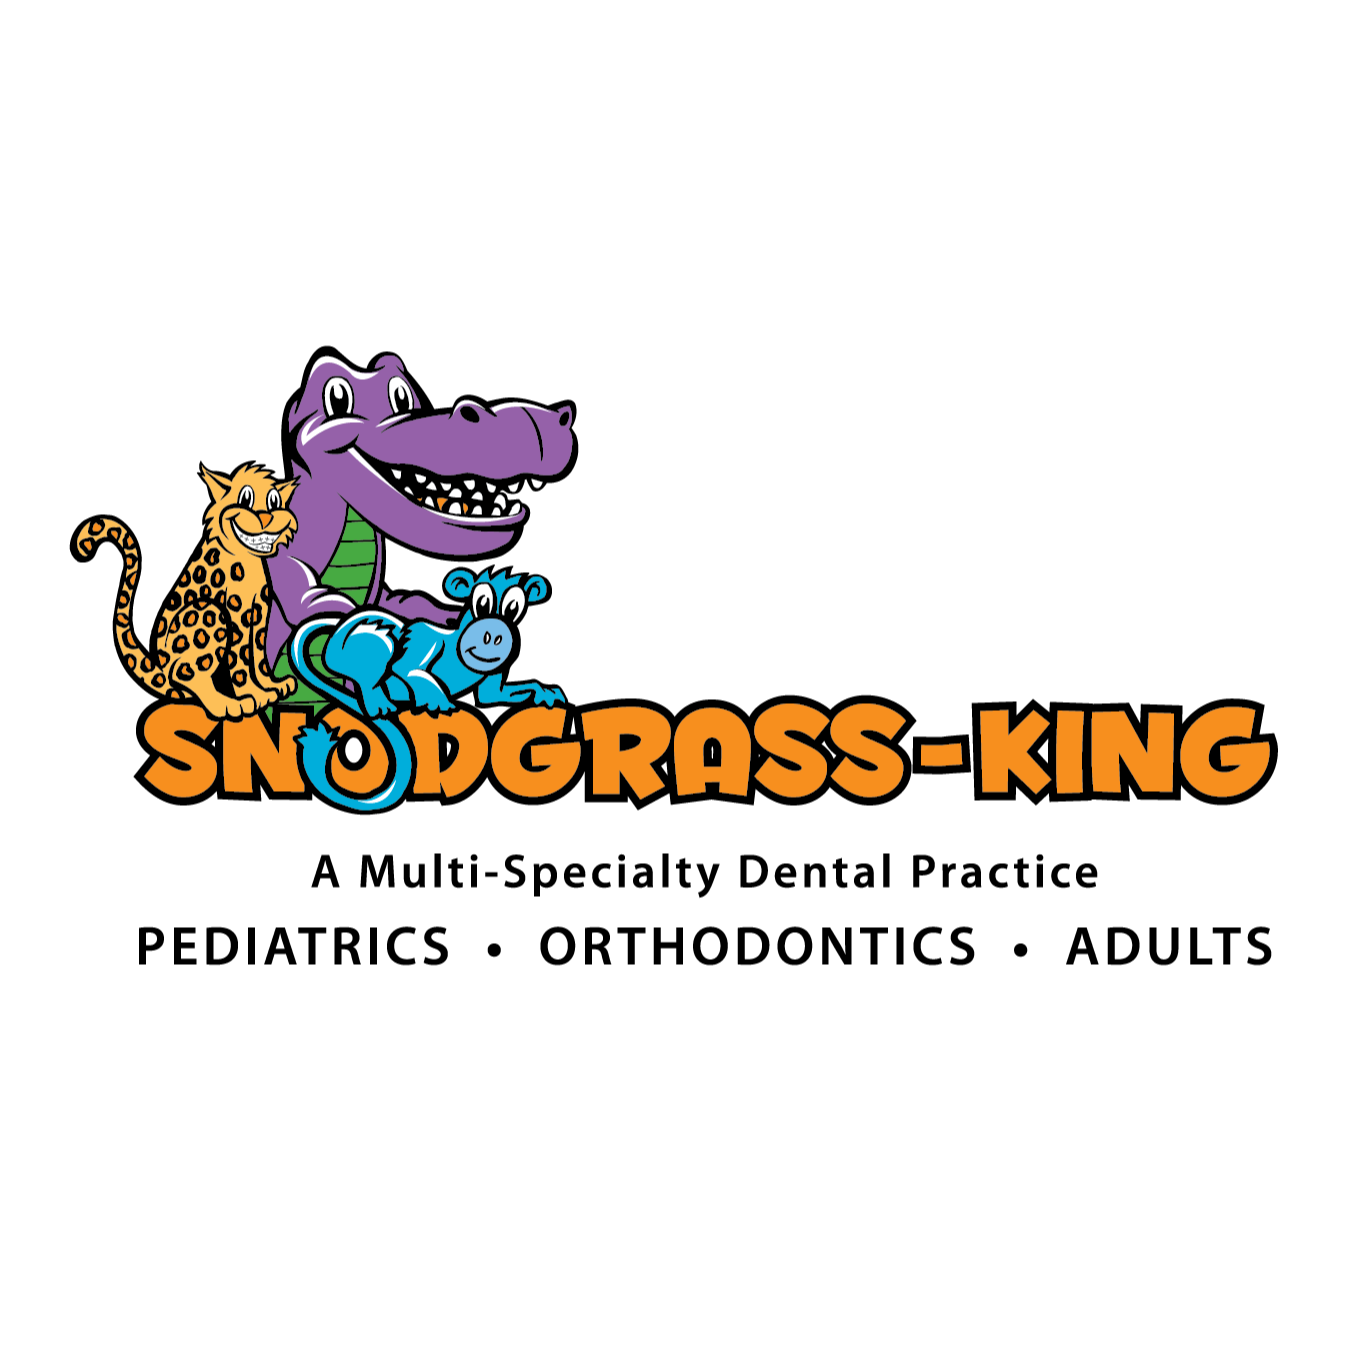 Snodgrass-King Dental Asssociates